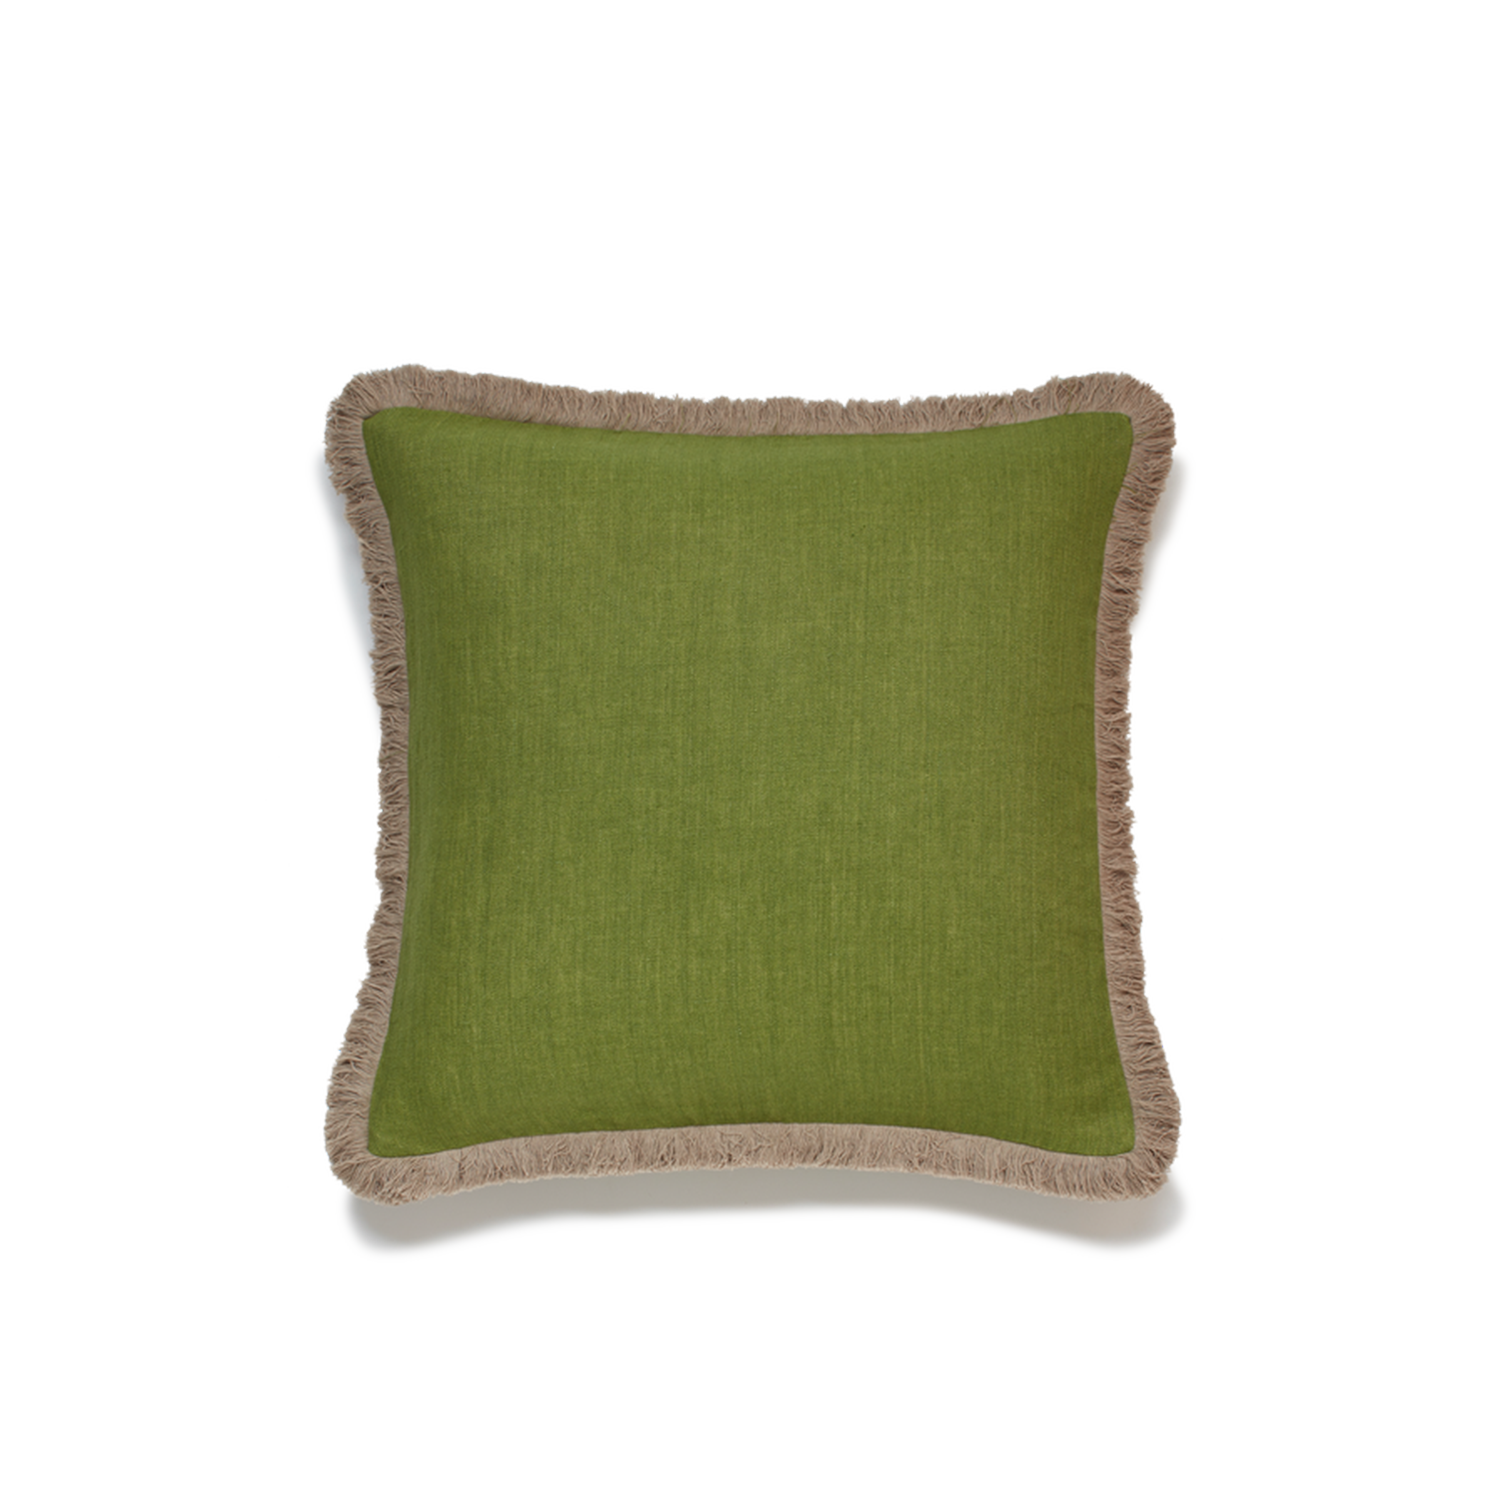 Lilias Putting Green Cushion Cover OKA